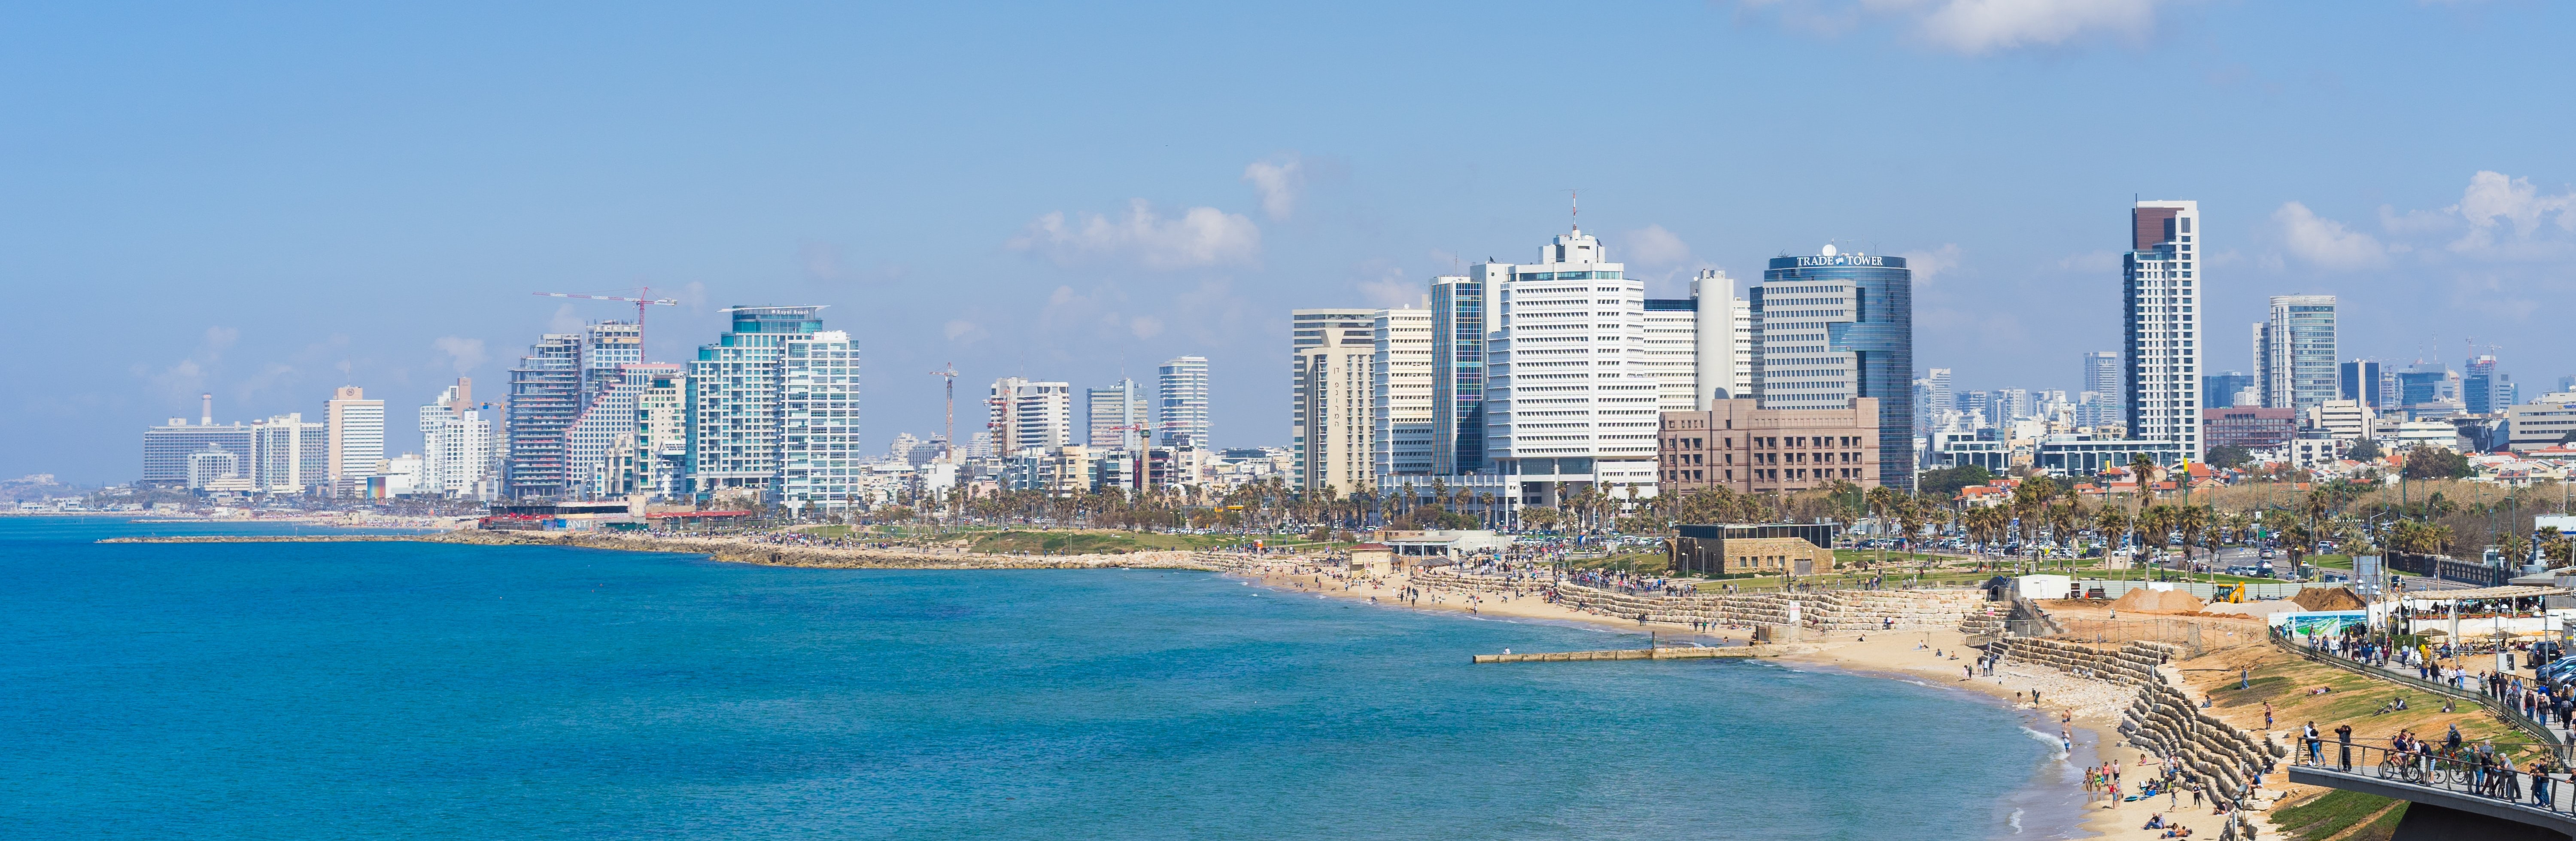 Israel View